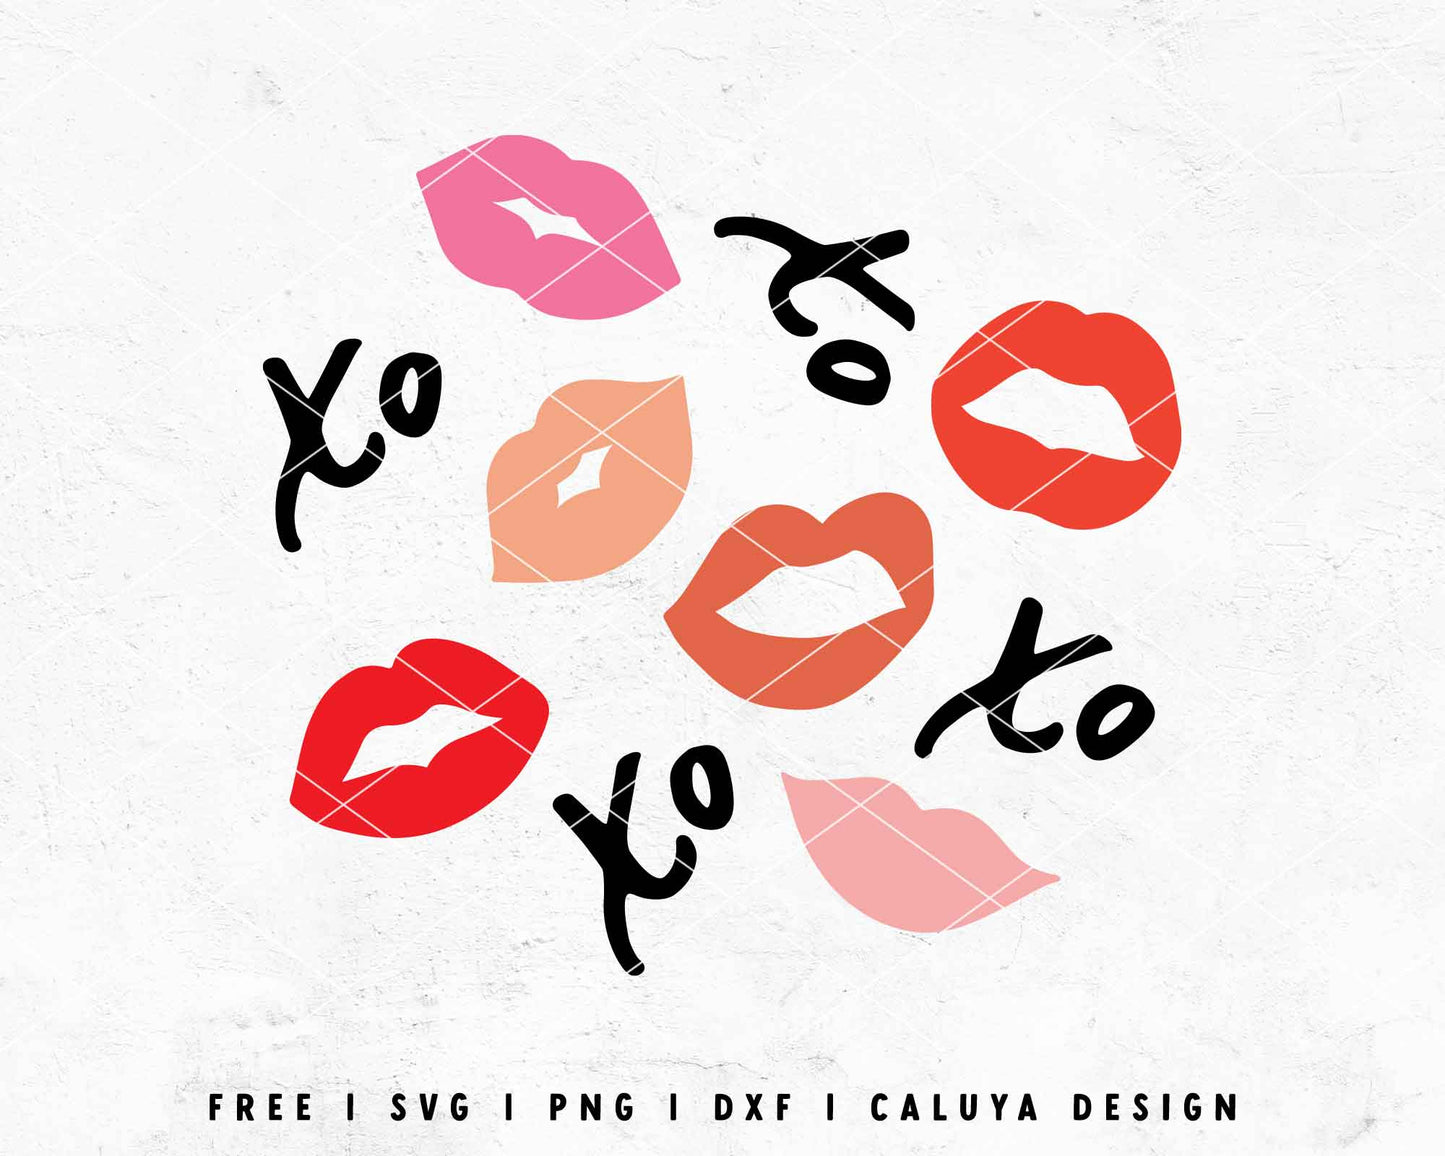 FREE Lips SVG | xo SVG | Valentine's Day SVG Cut File for Cricut, Cameo Silhouette | Free SVG Cut File